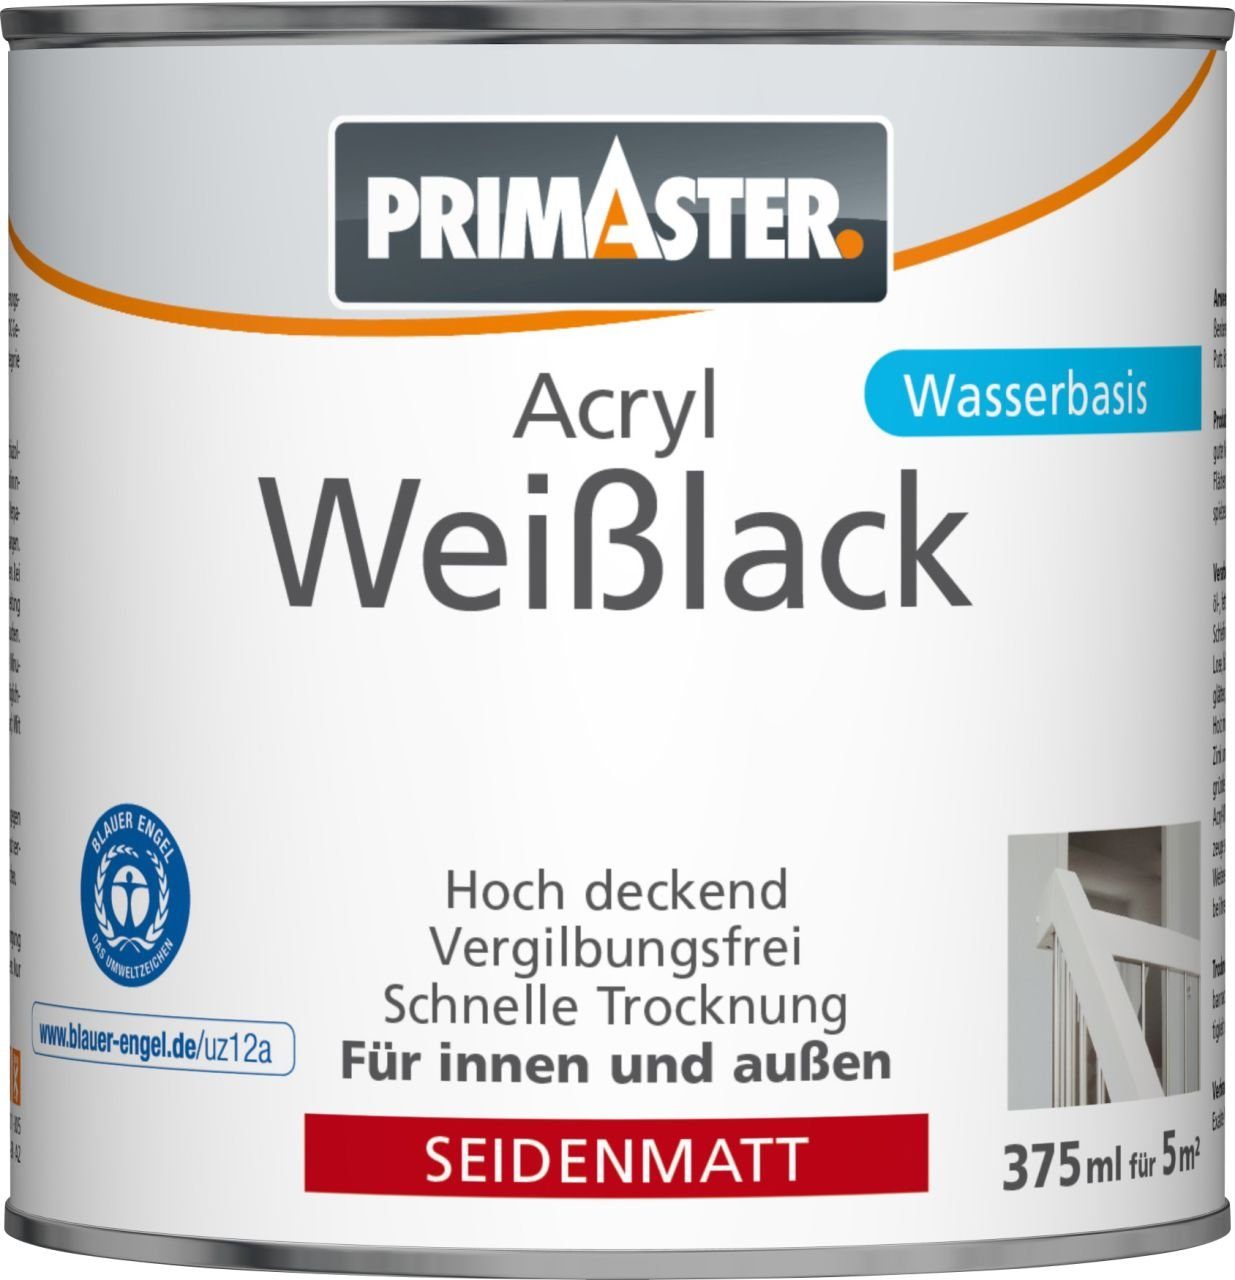 375 ml Weißlack Acryl Weißlack seidenmatt Primaster Primaster